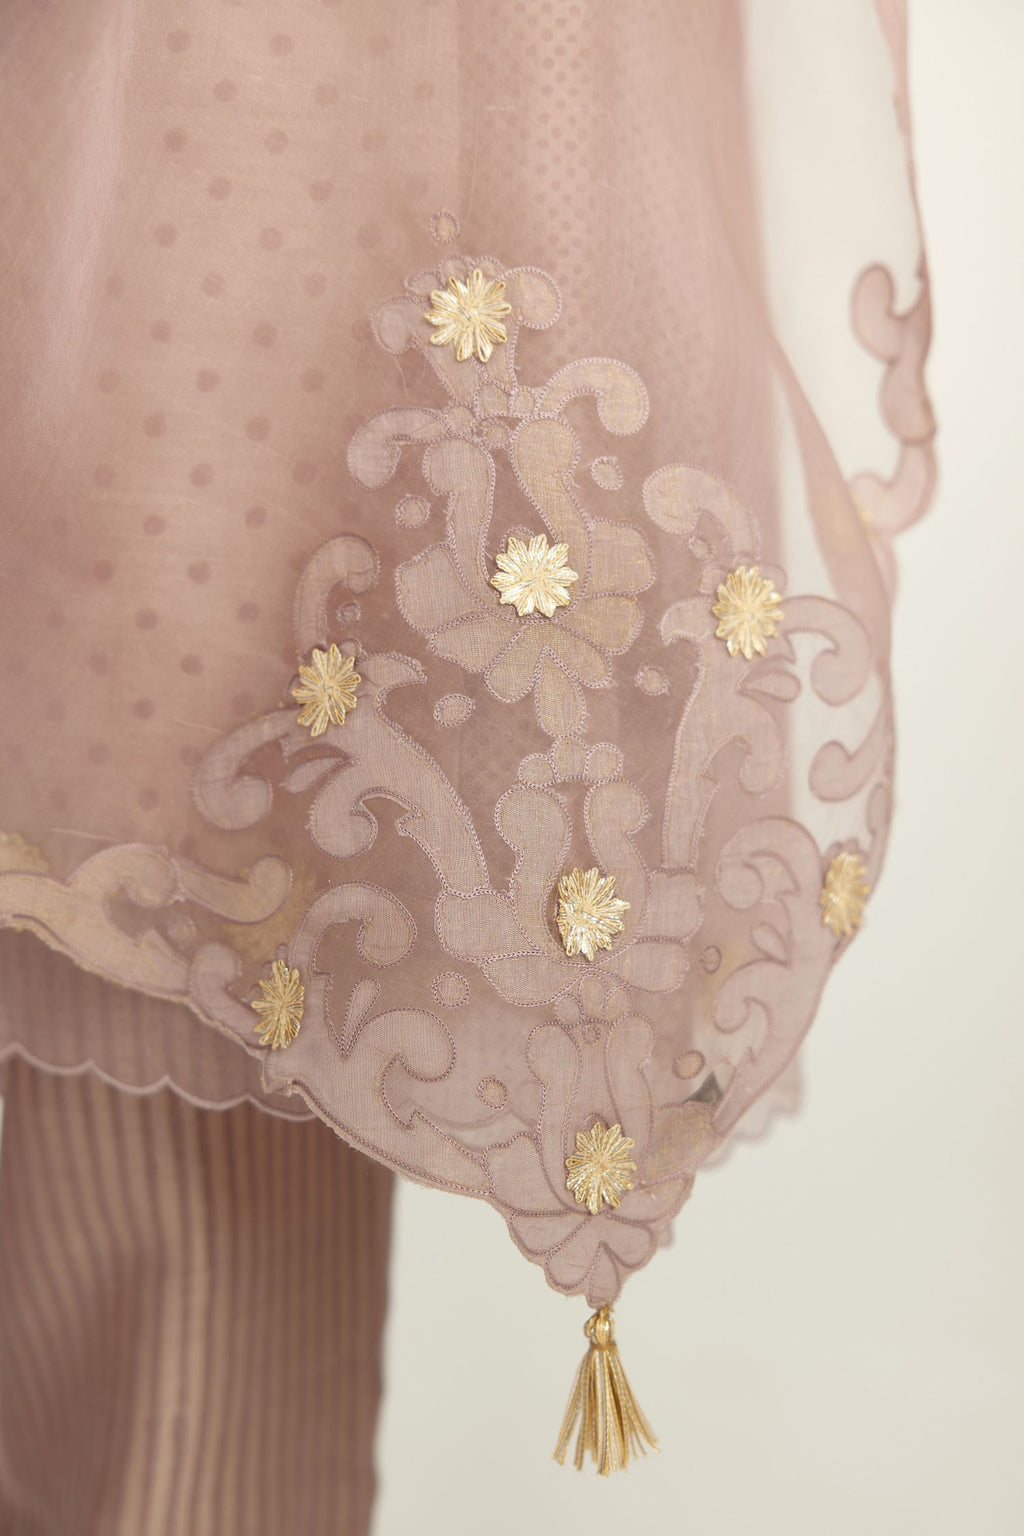 Lilac A-line hand block printed silk chanderi short kurta set, highlighted with gota flower embroidery.